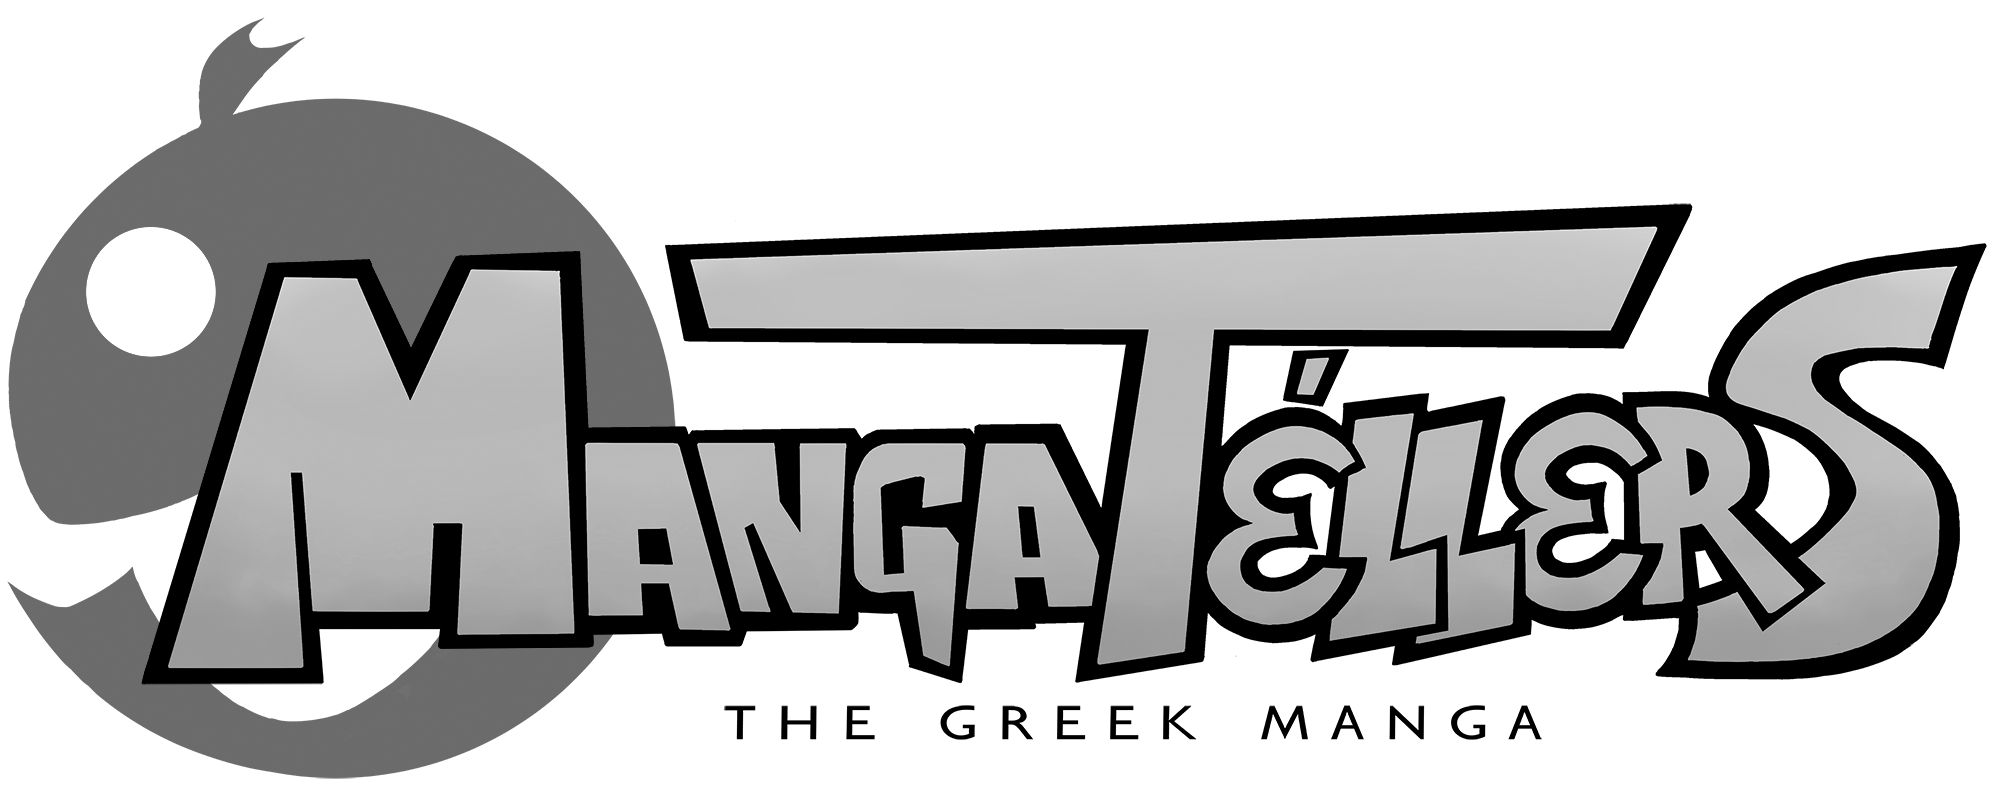 mangatellers-logo